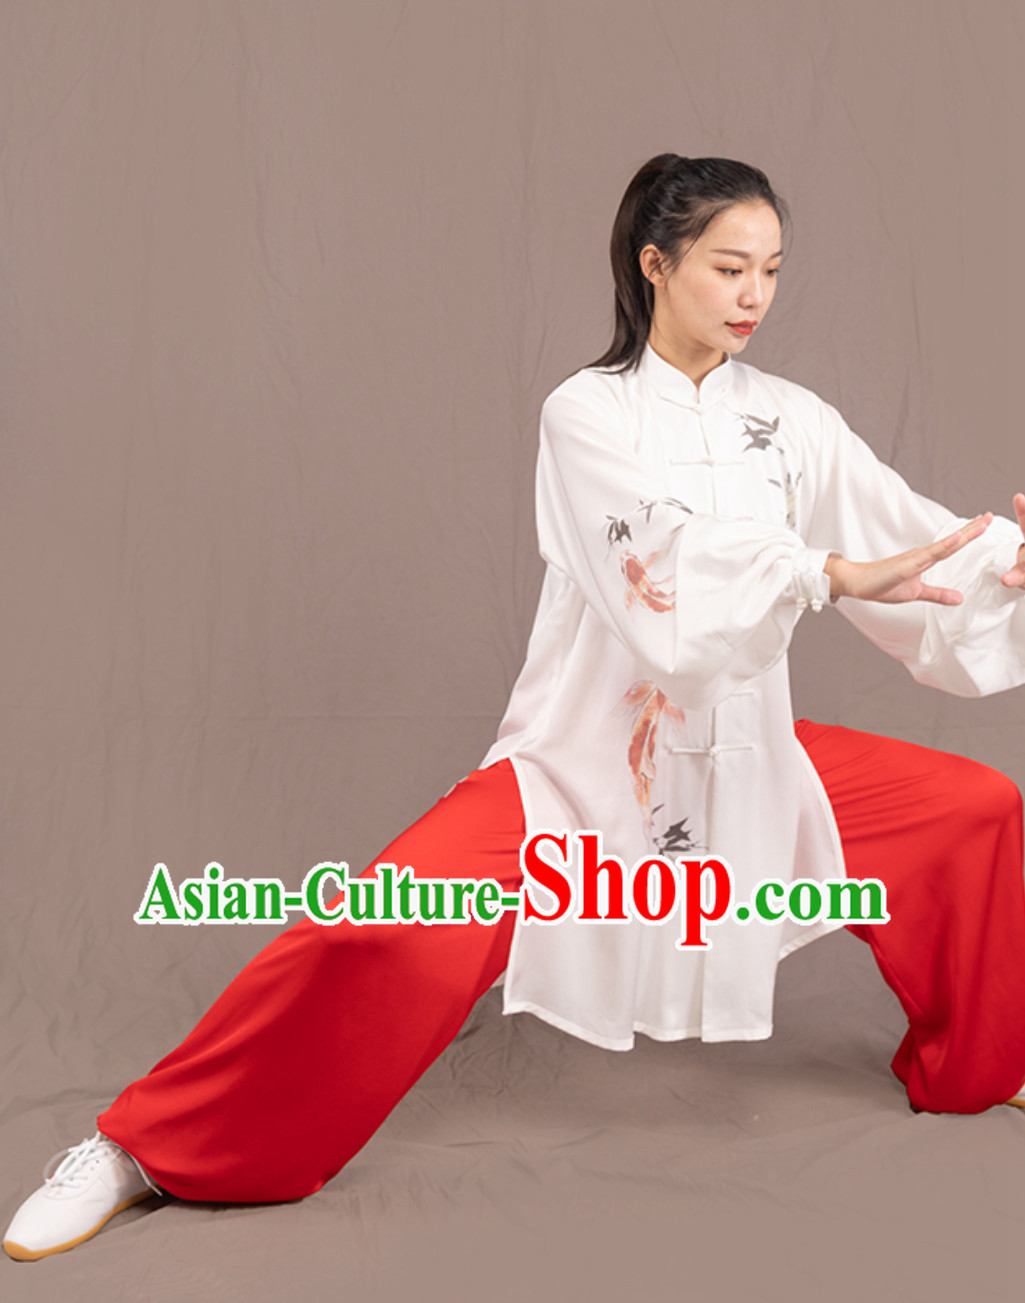 Top Chinese Traditional Competition Championship Professional Tai Chi Uniforms Taiji Kung Fu Wing Chun Kungfu Tai Ji Sword Master Clothing Suits Clothes for Women